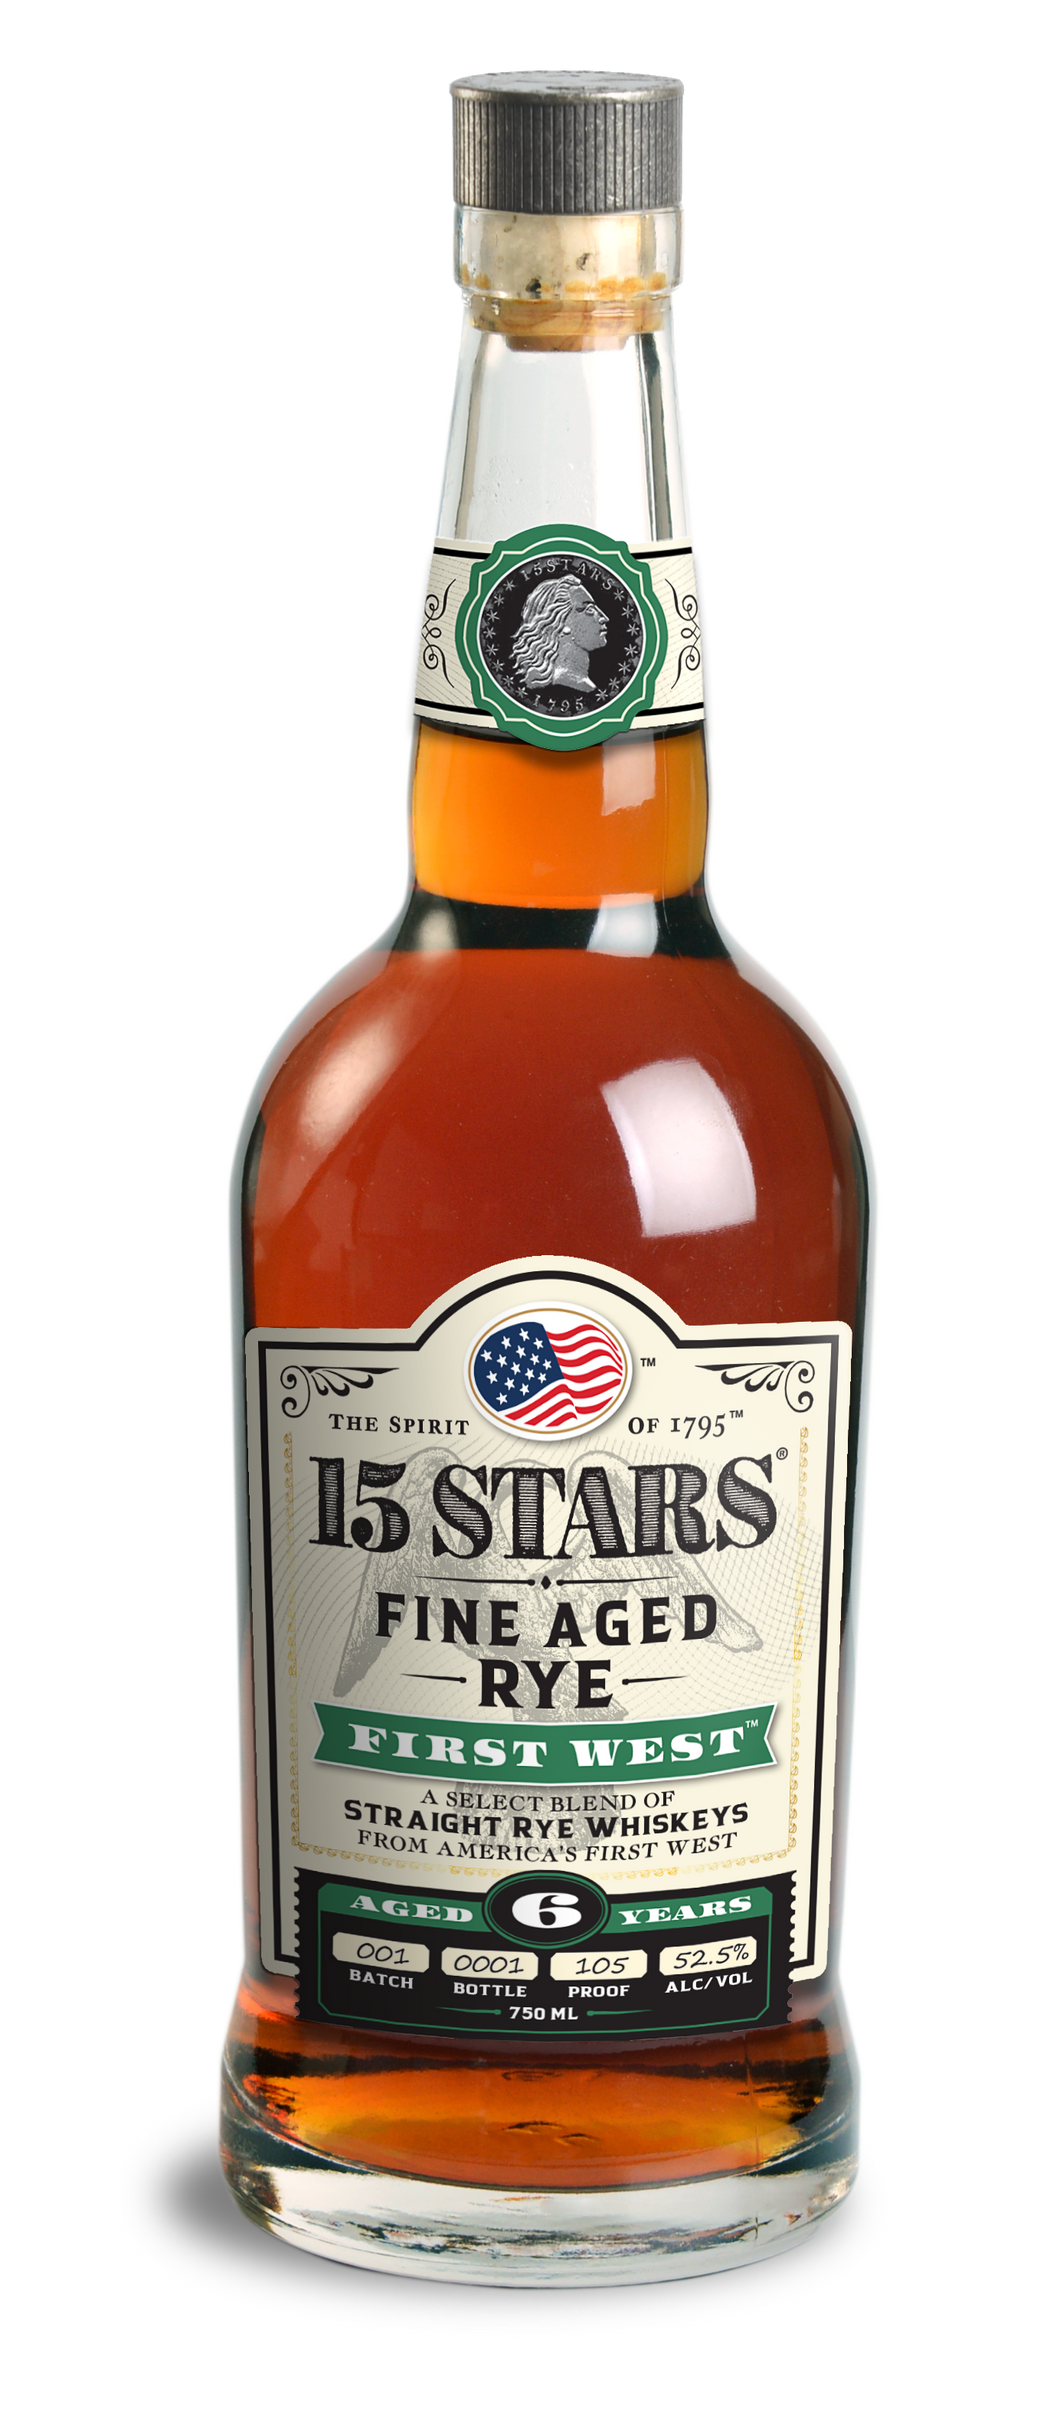 15 STARS First West Straight Rye Whiskey